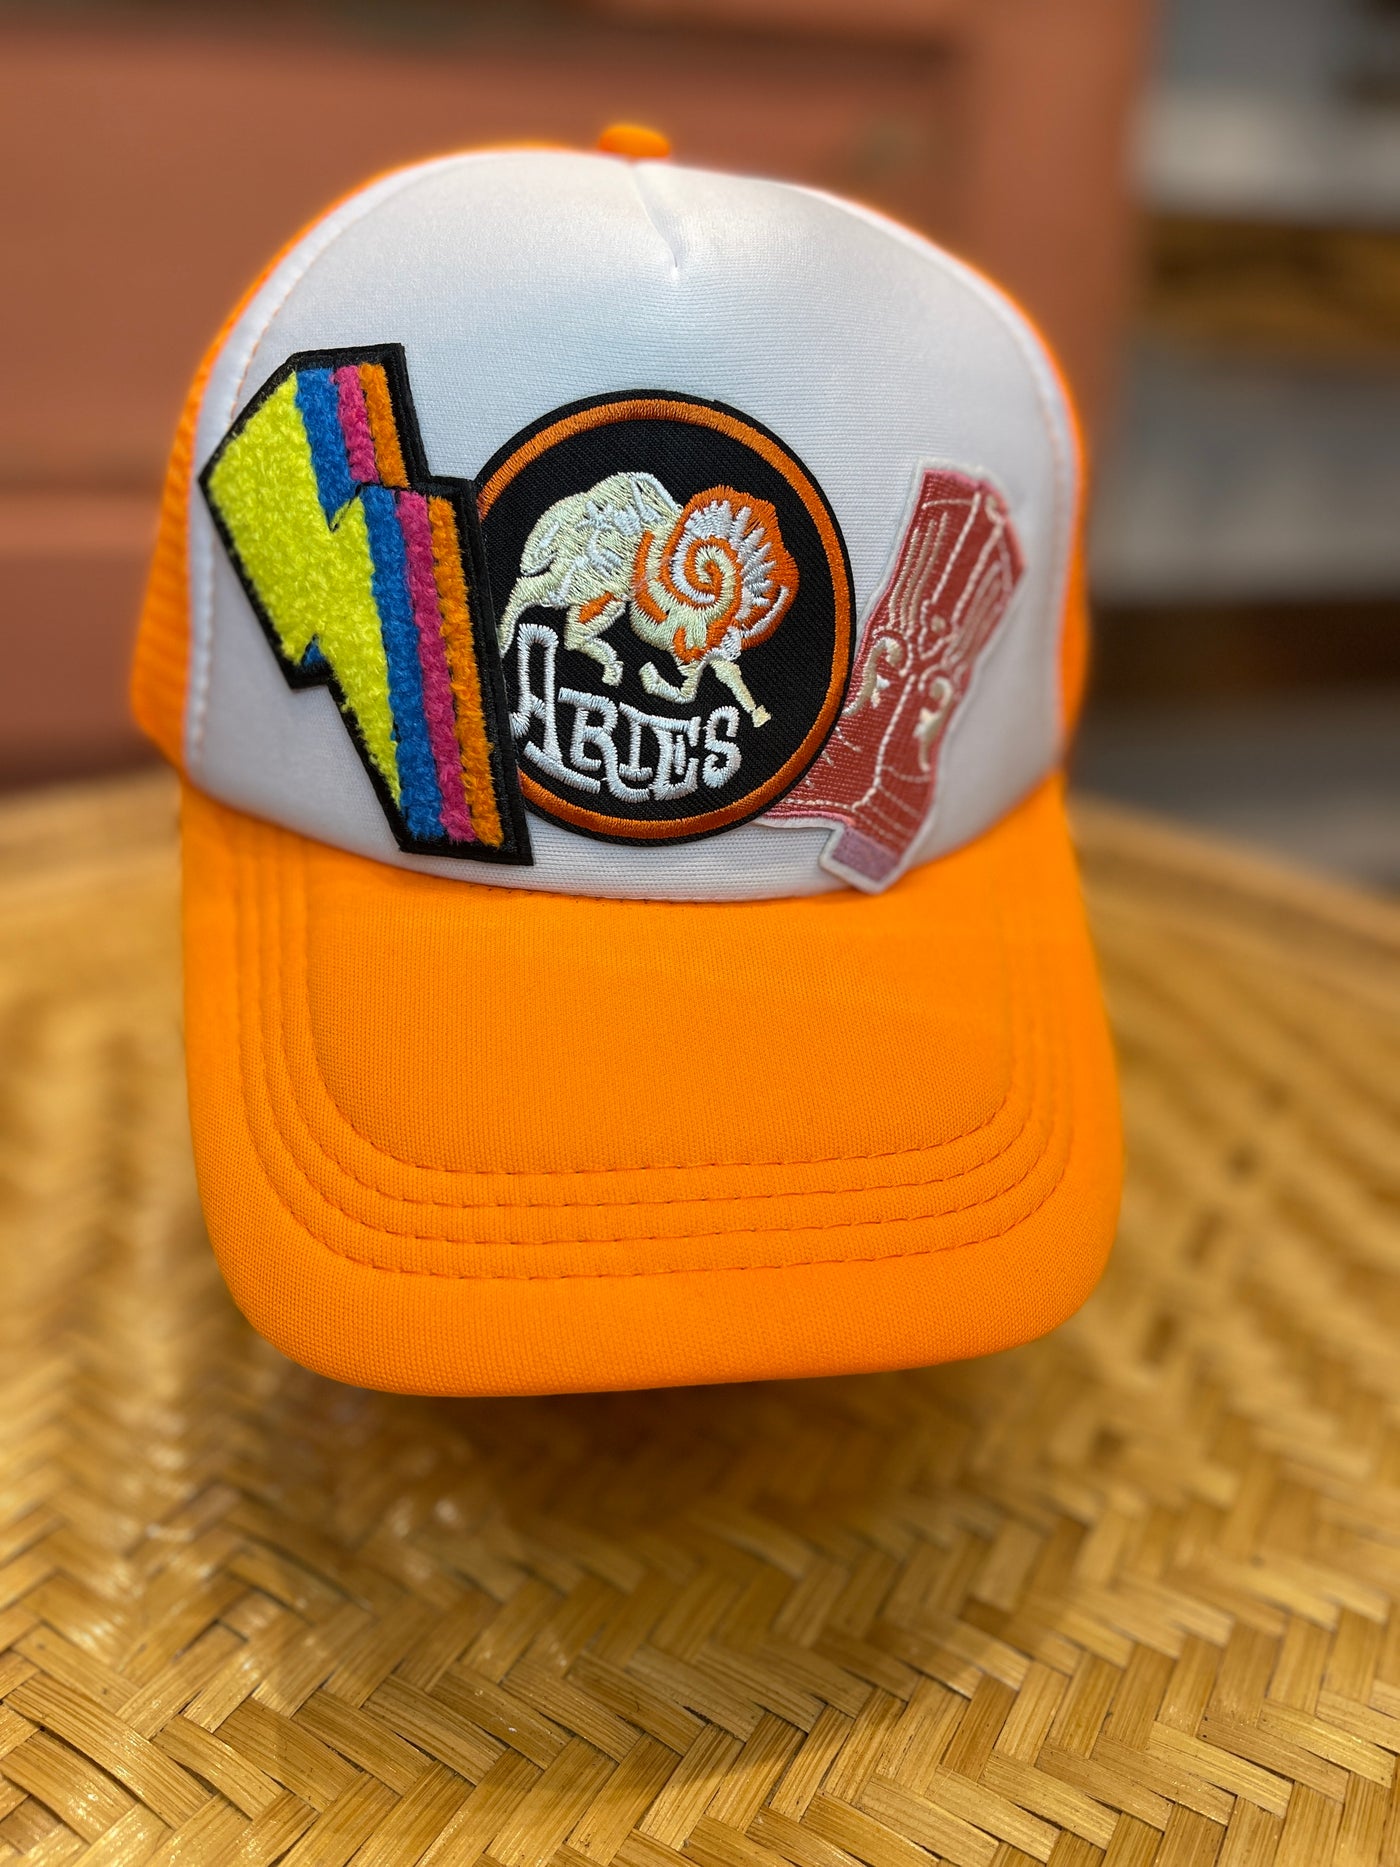 Angie's Custom Trucker Hats